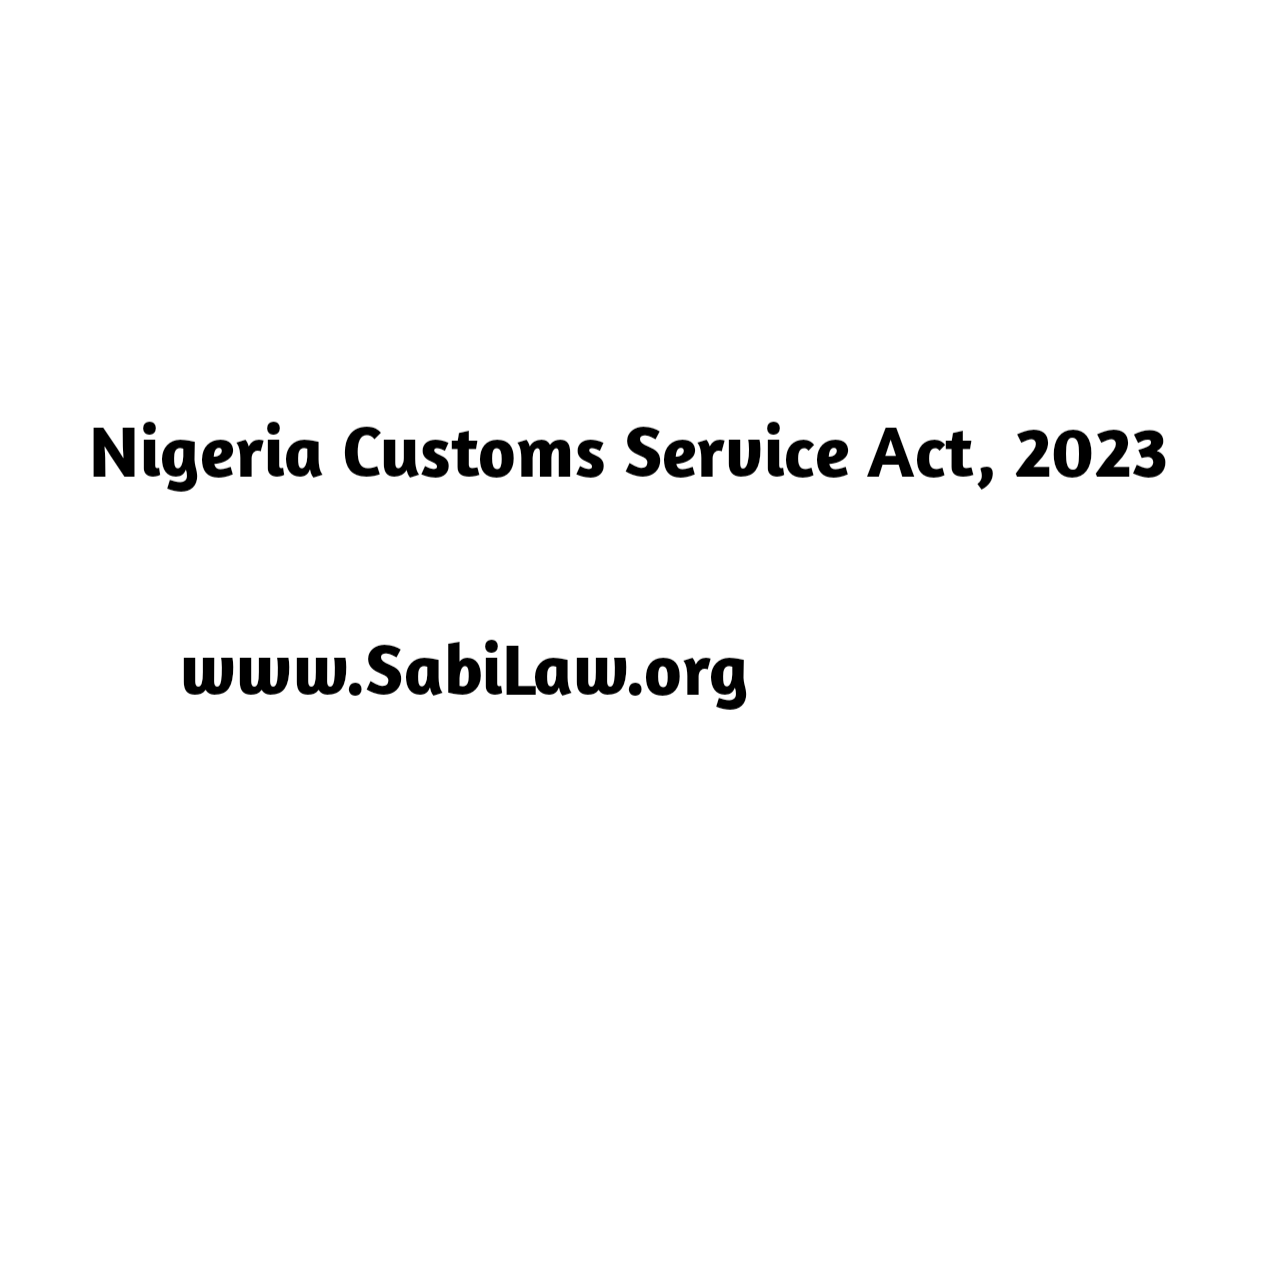 Nigeria Customs Service Act, 2023